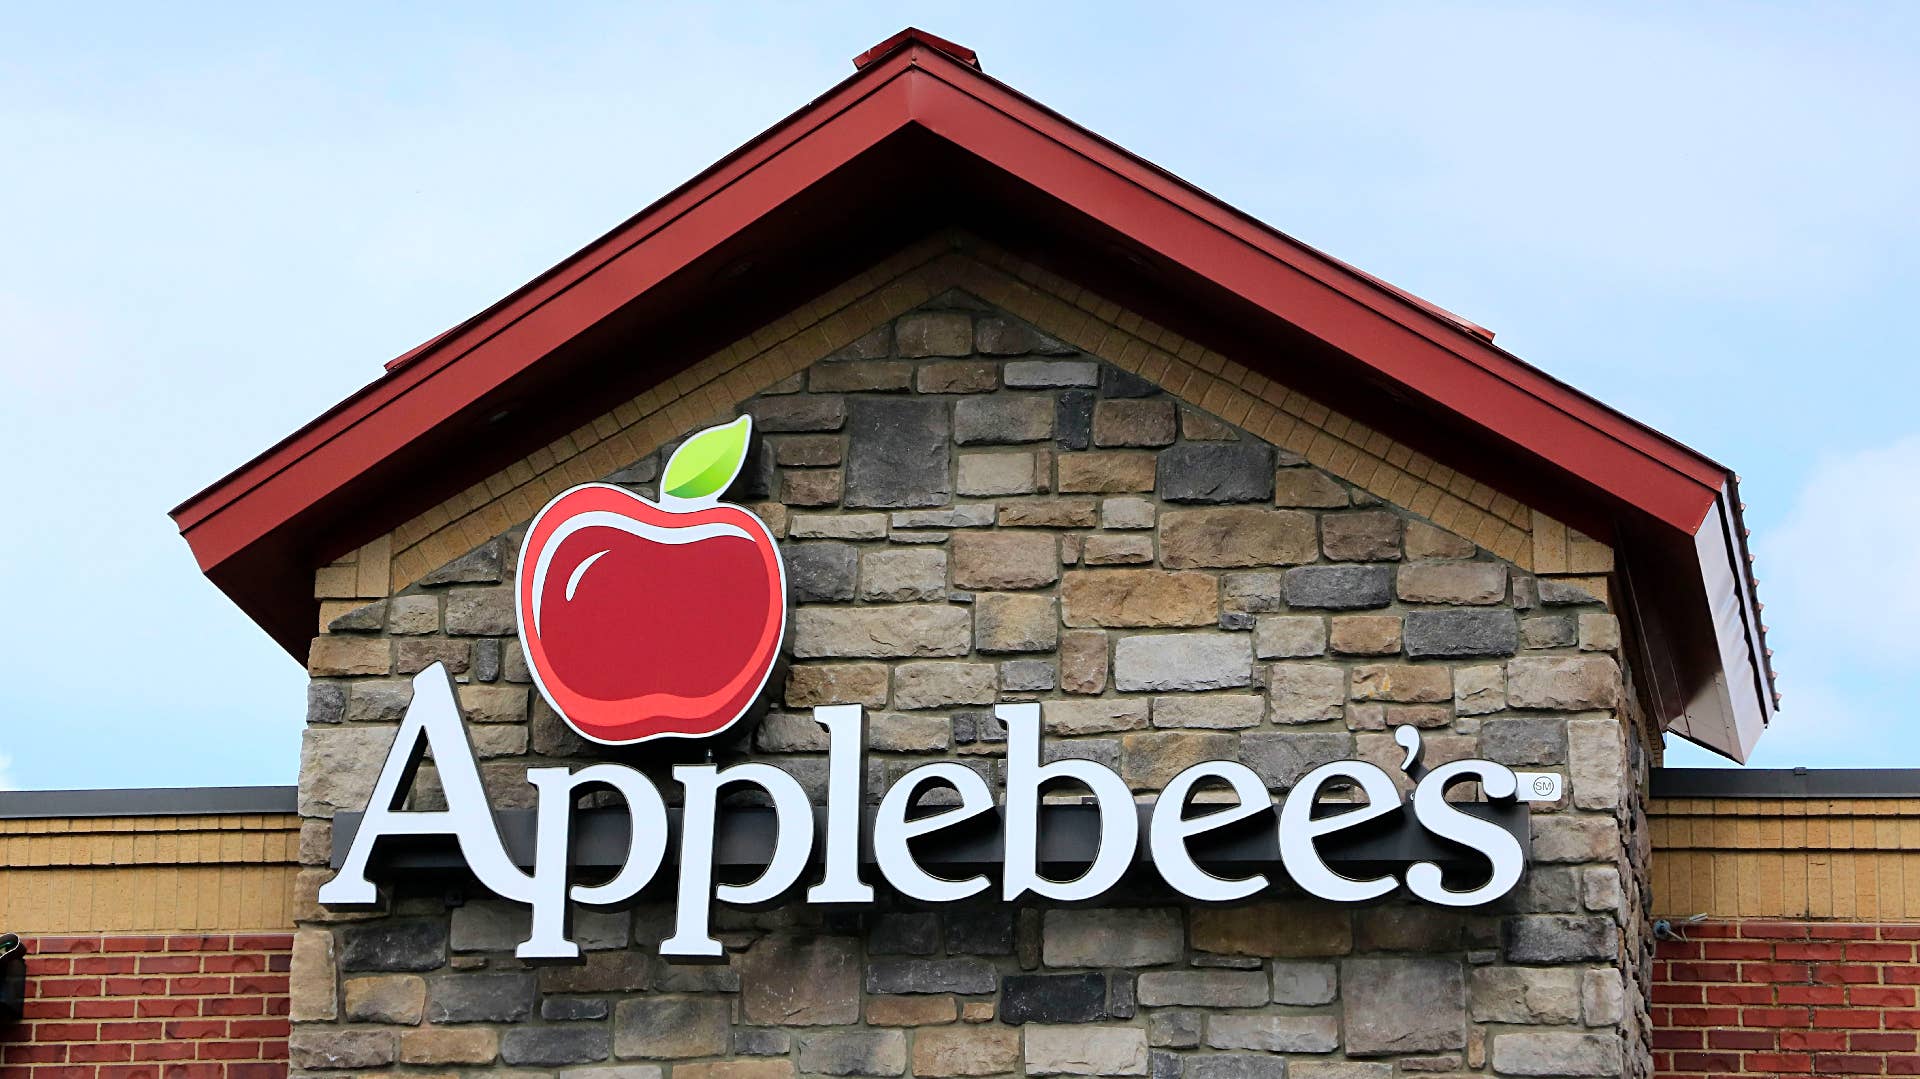 Applebee's restaurant logo on wall above entrance.